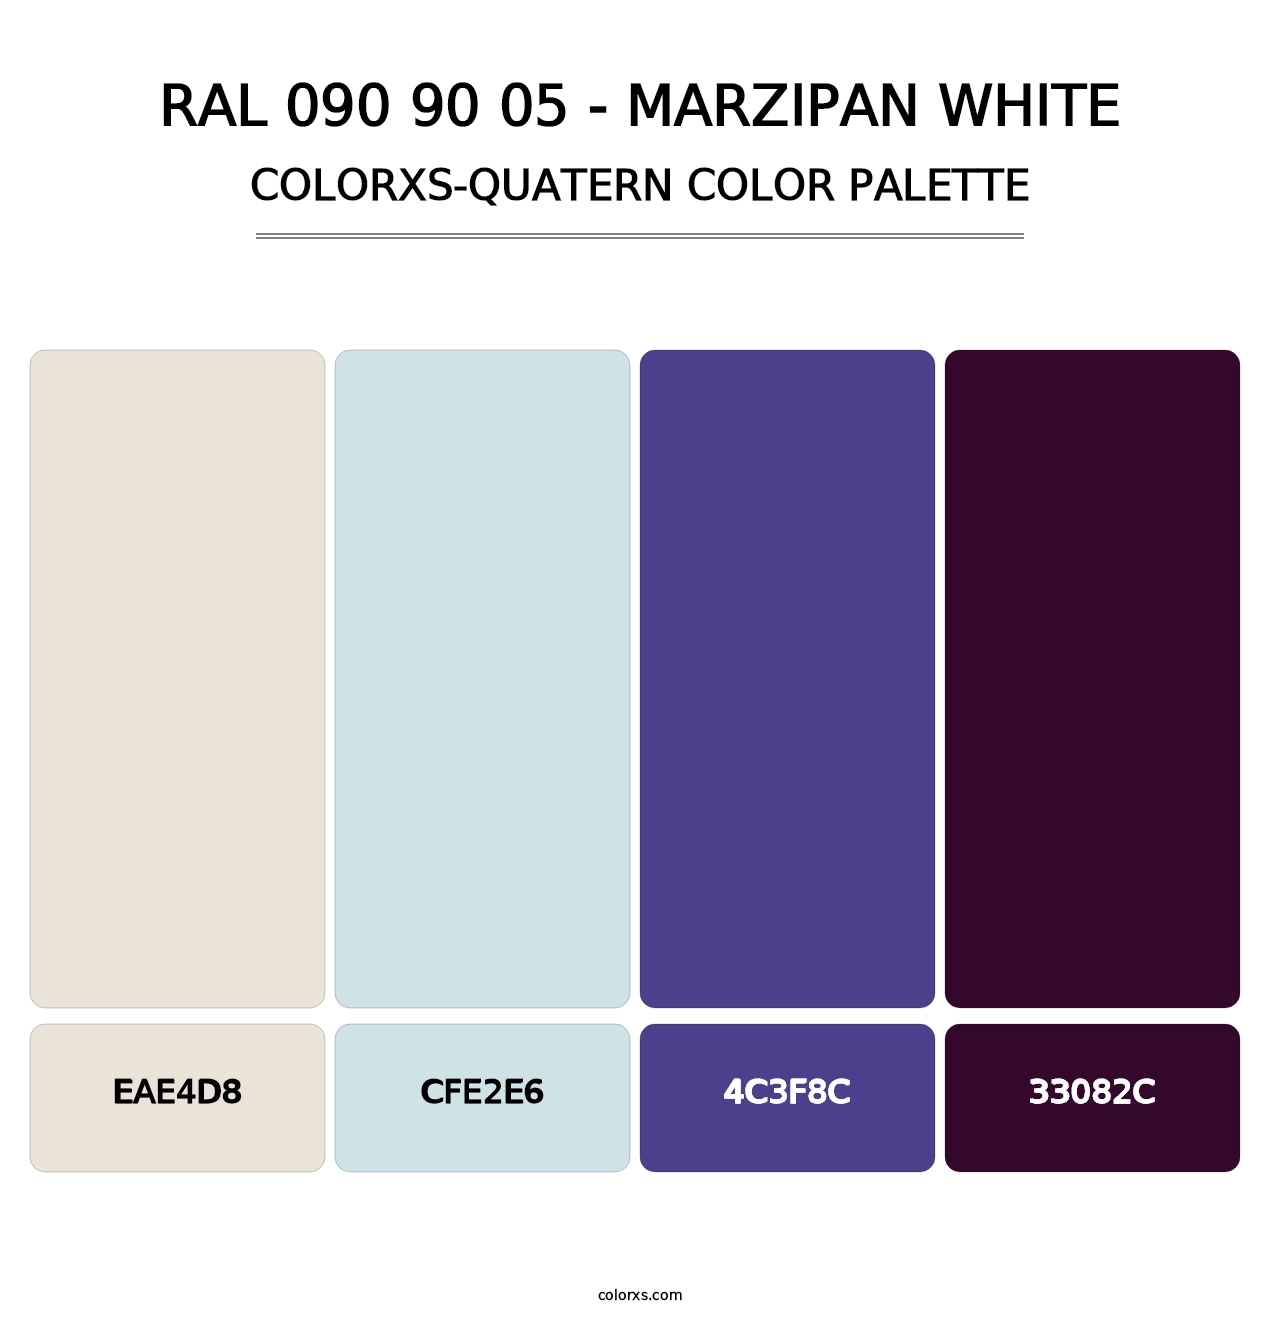 RAL 090 90 05 - Marzipan White - Colorxs Quatern Palette